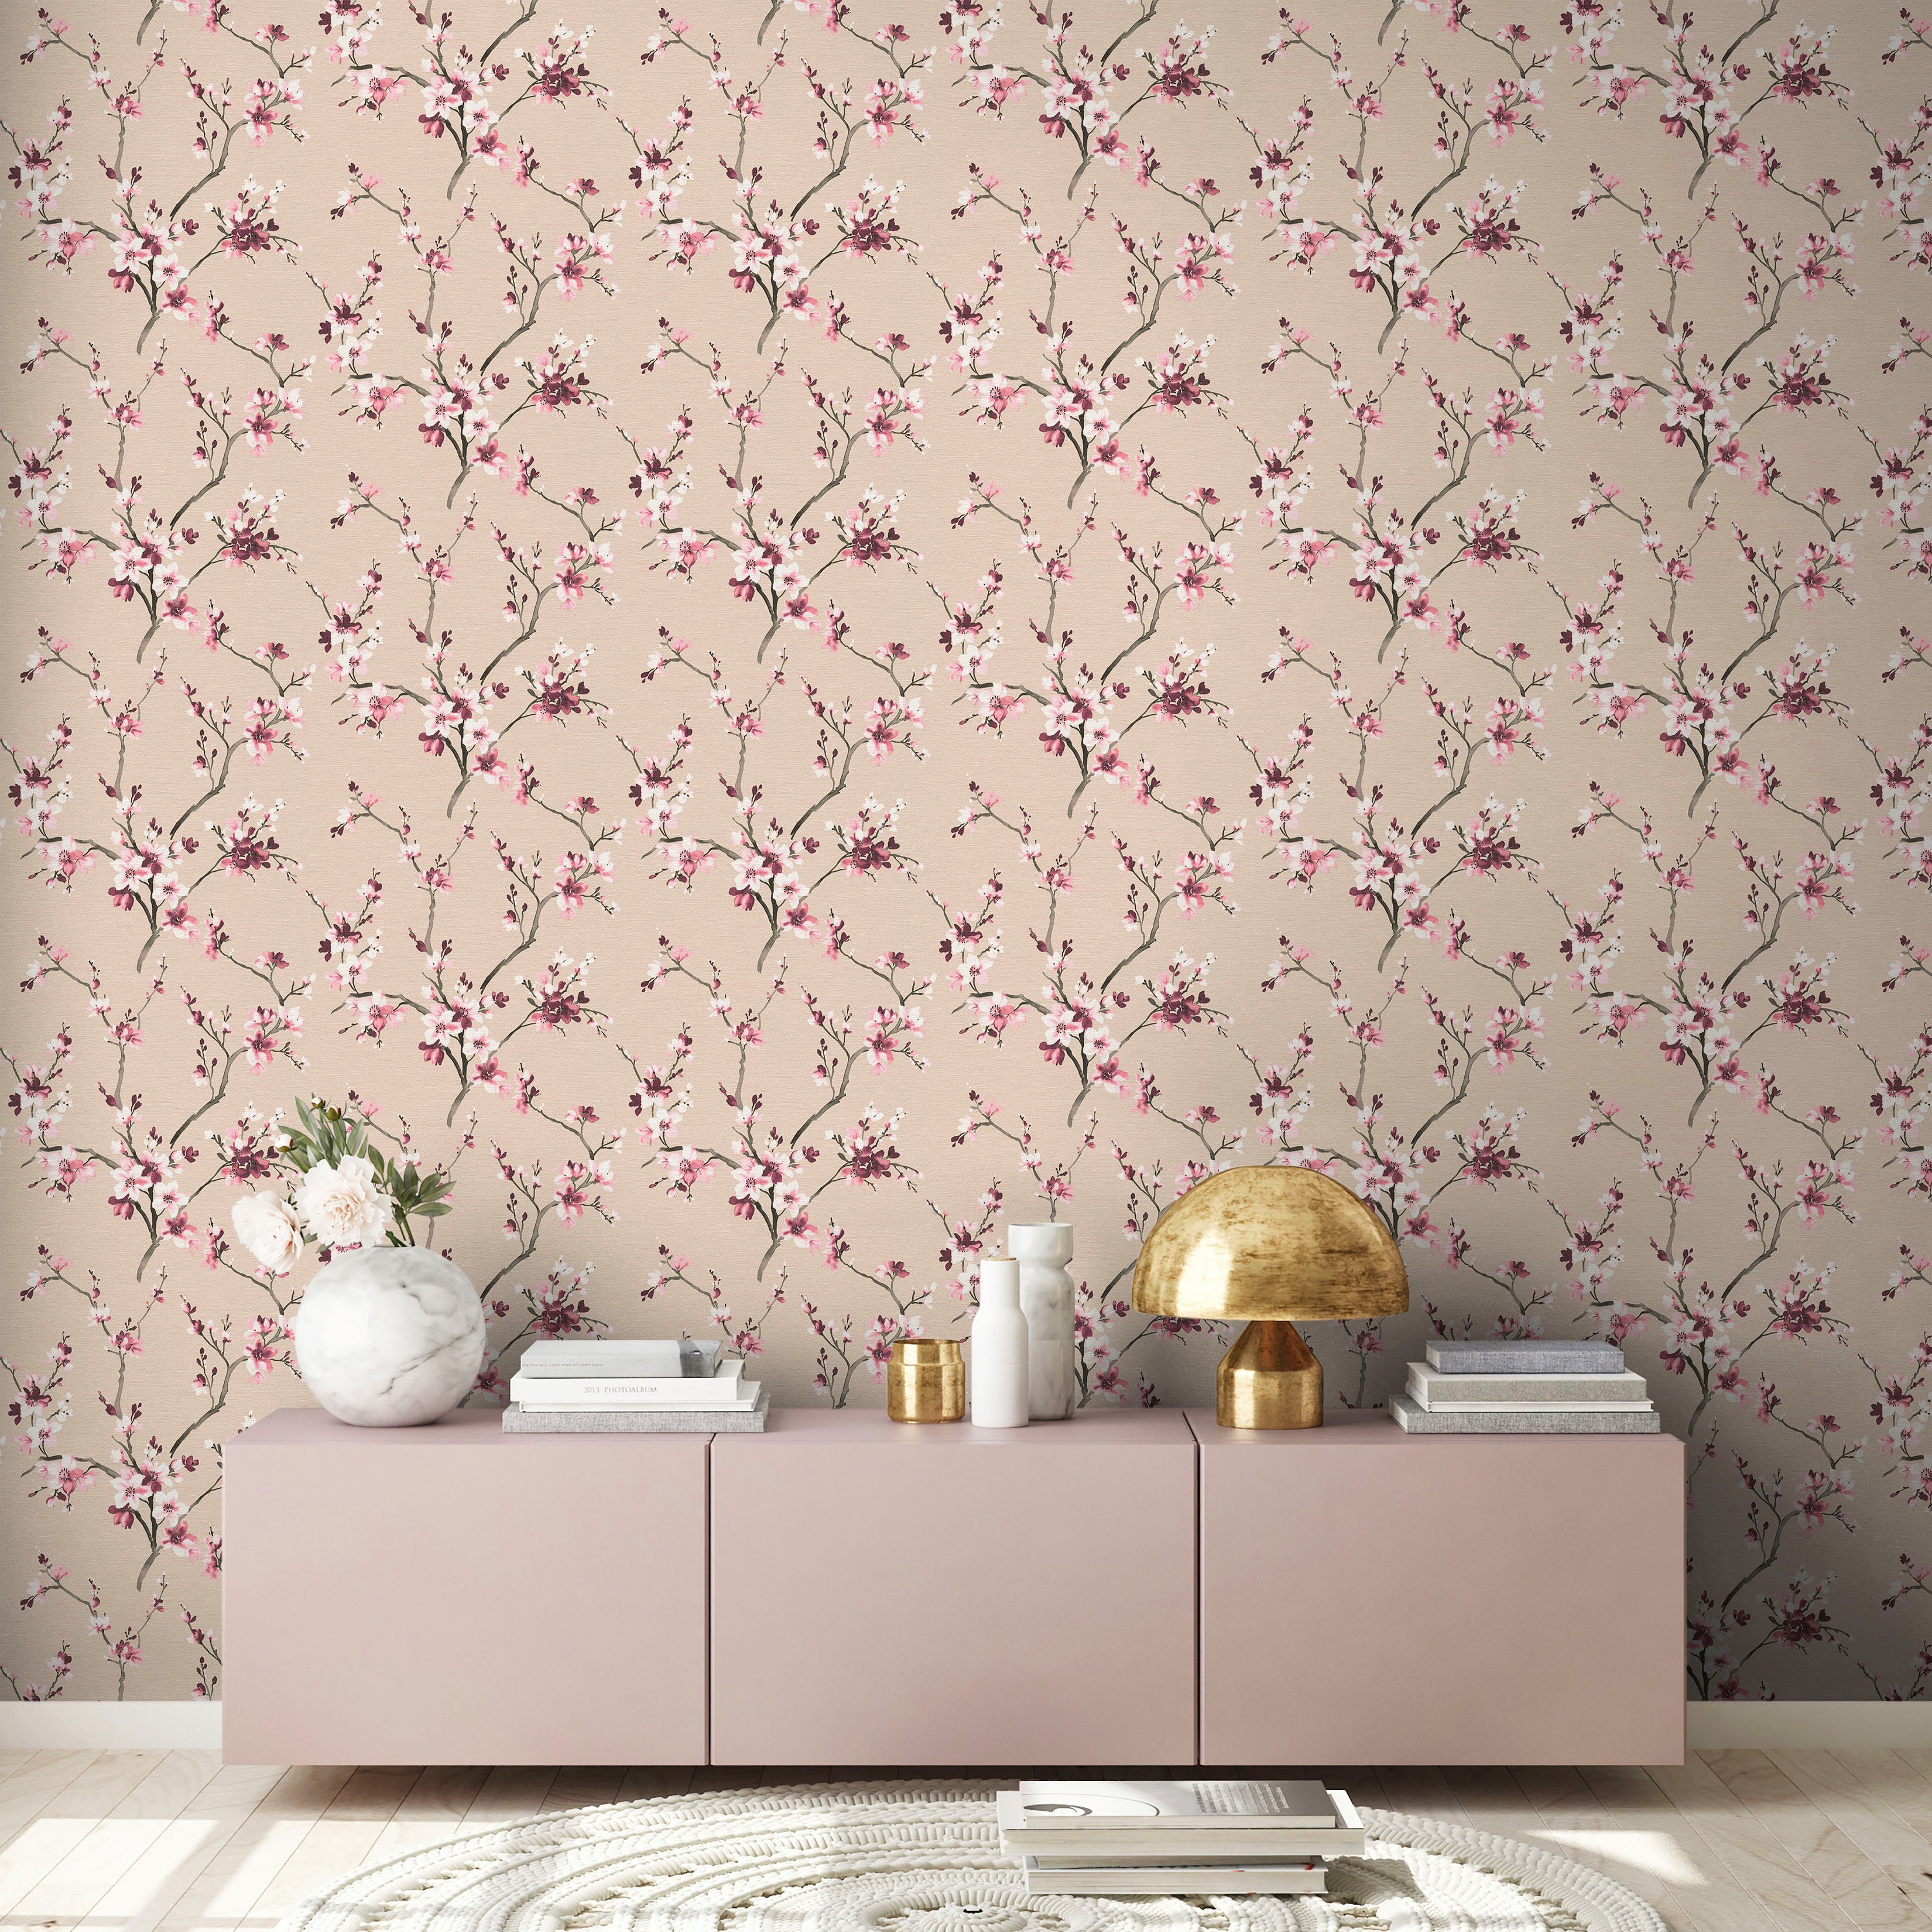 walls Desert natürlich, Tapete Blumenoptik Création floral, Lodge, A.S. geblümt, living strukturiert, rosa/beige Vliestapete